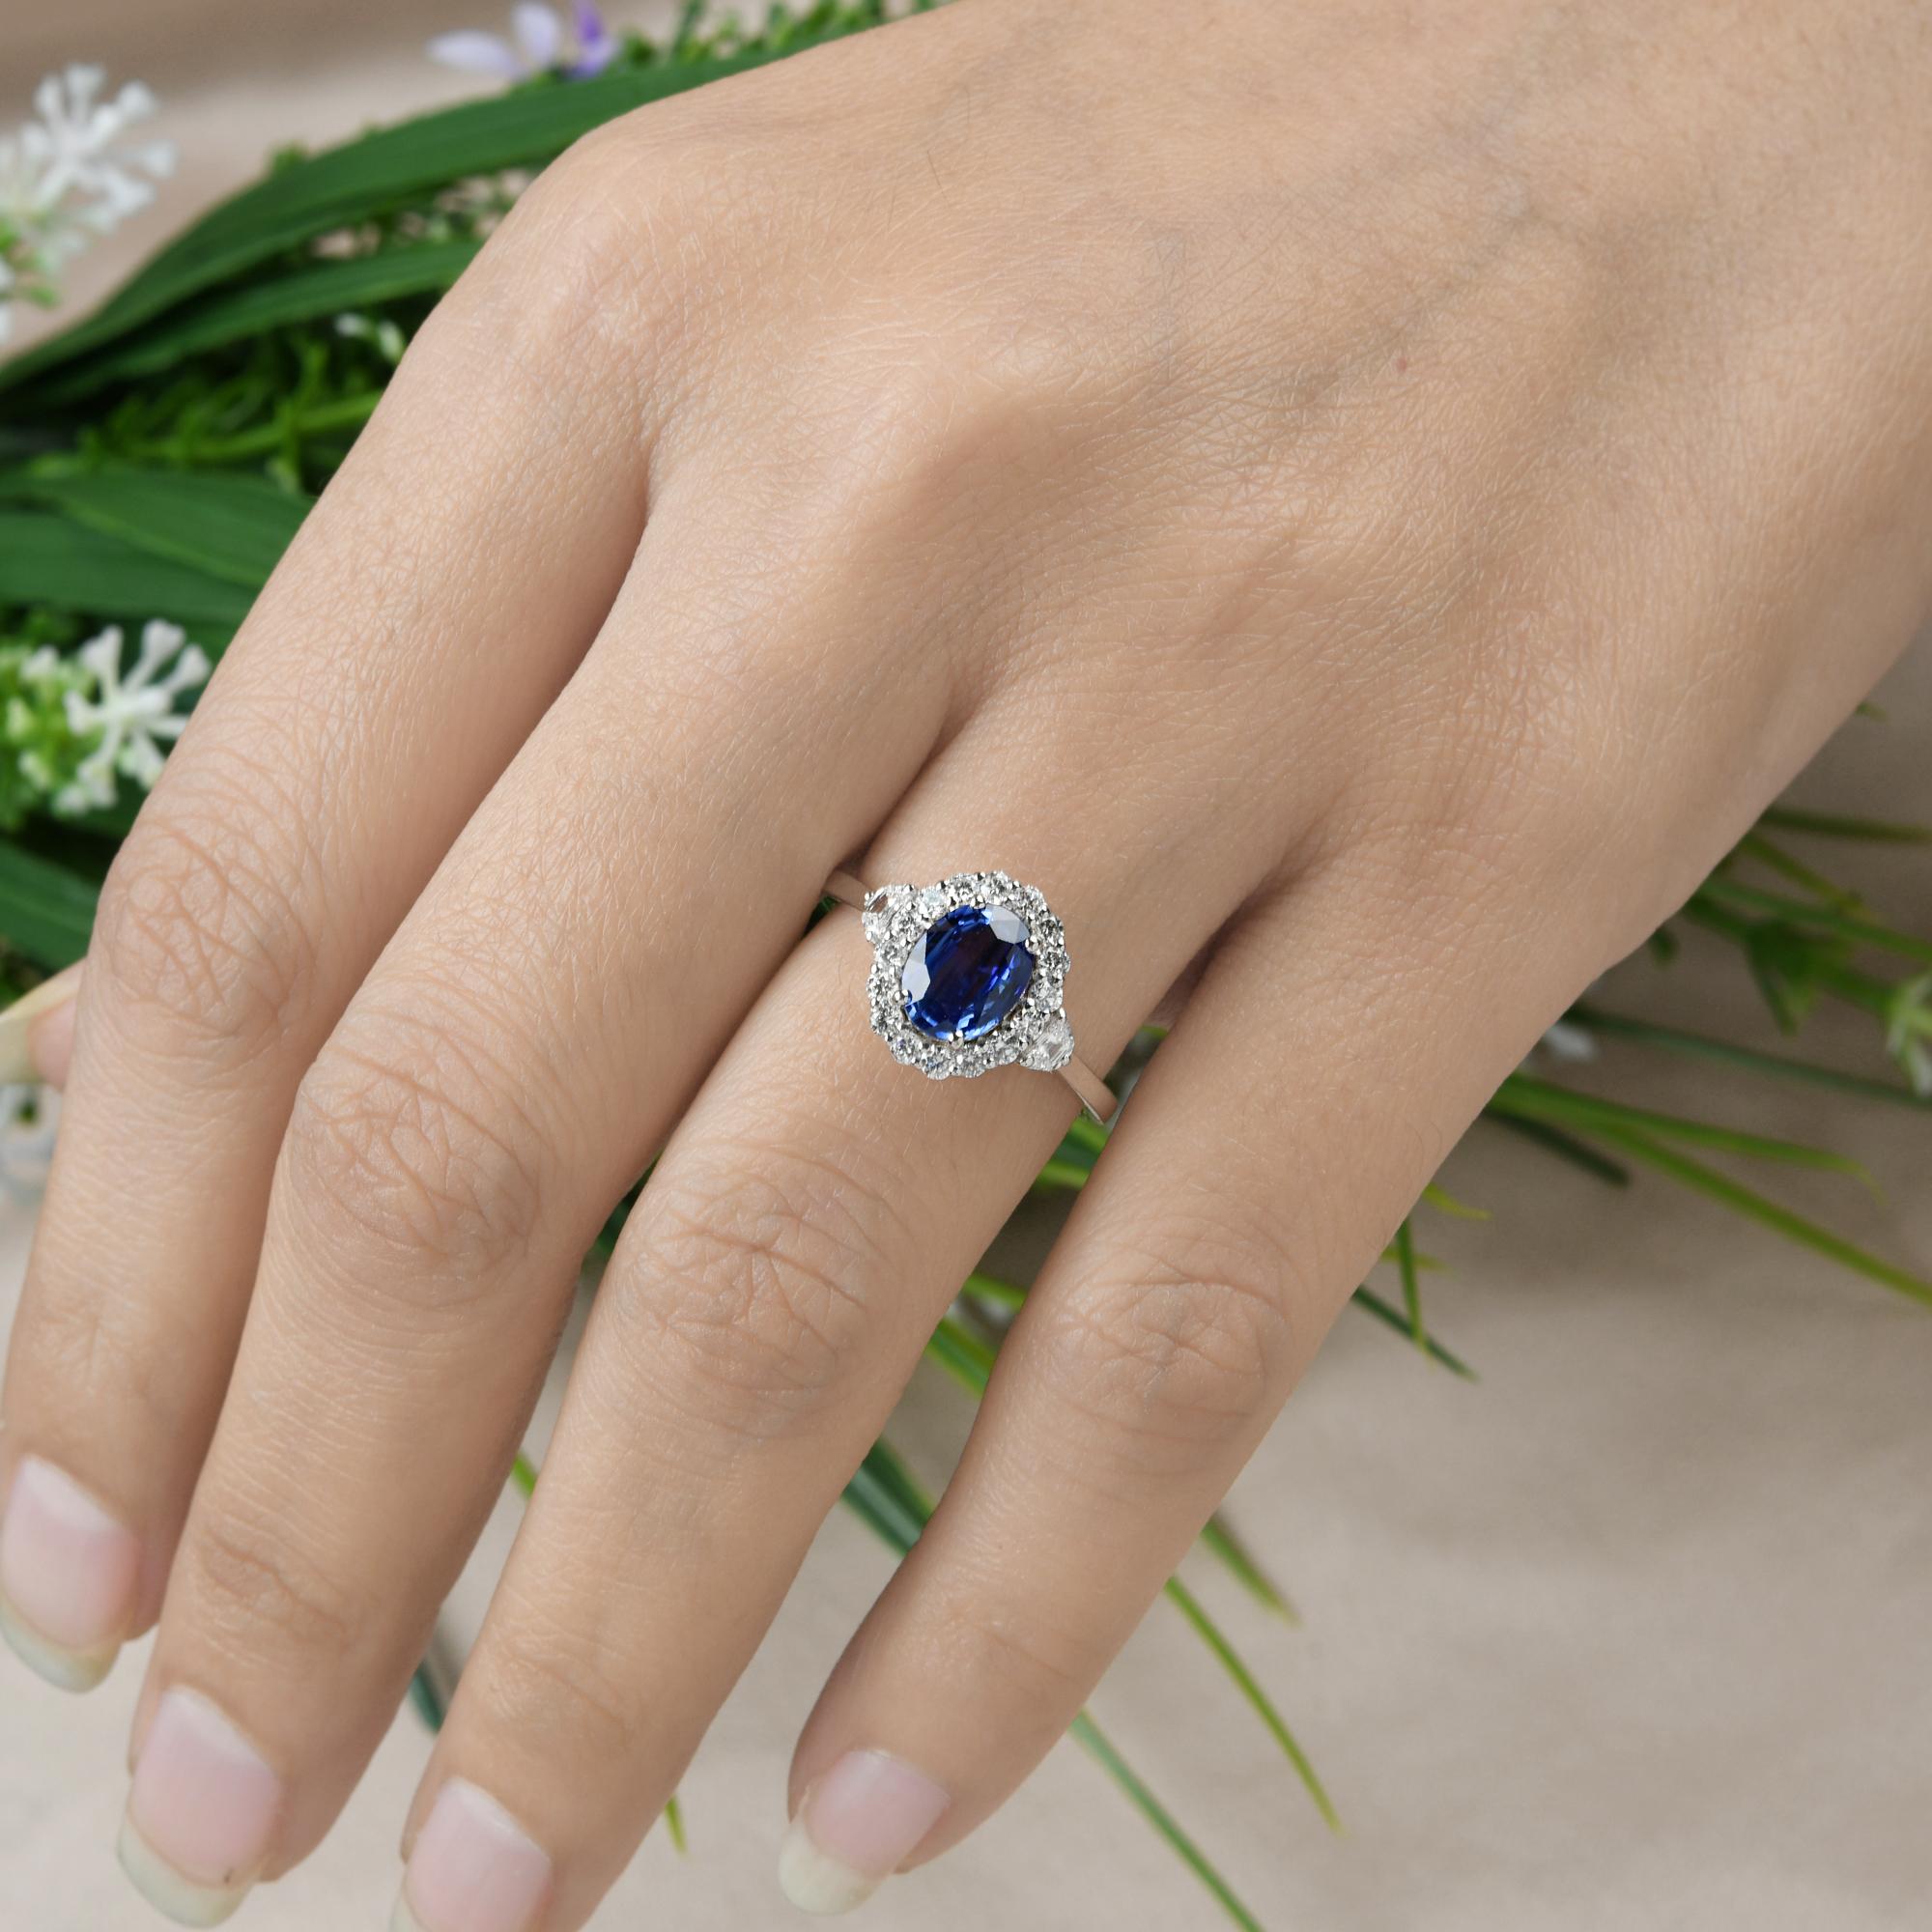 Women's Oval Blue Sapphire Gemstone Cocktail Ring Diamond 18 Karat White Gold Jewelry For Sale